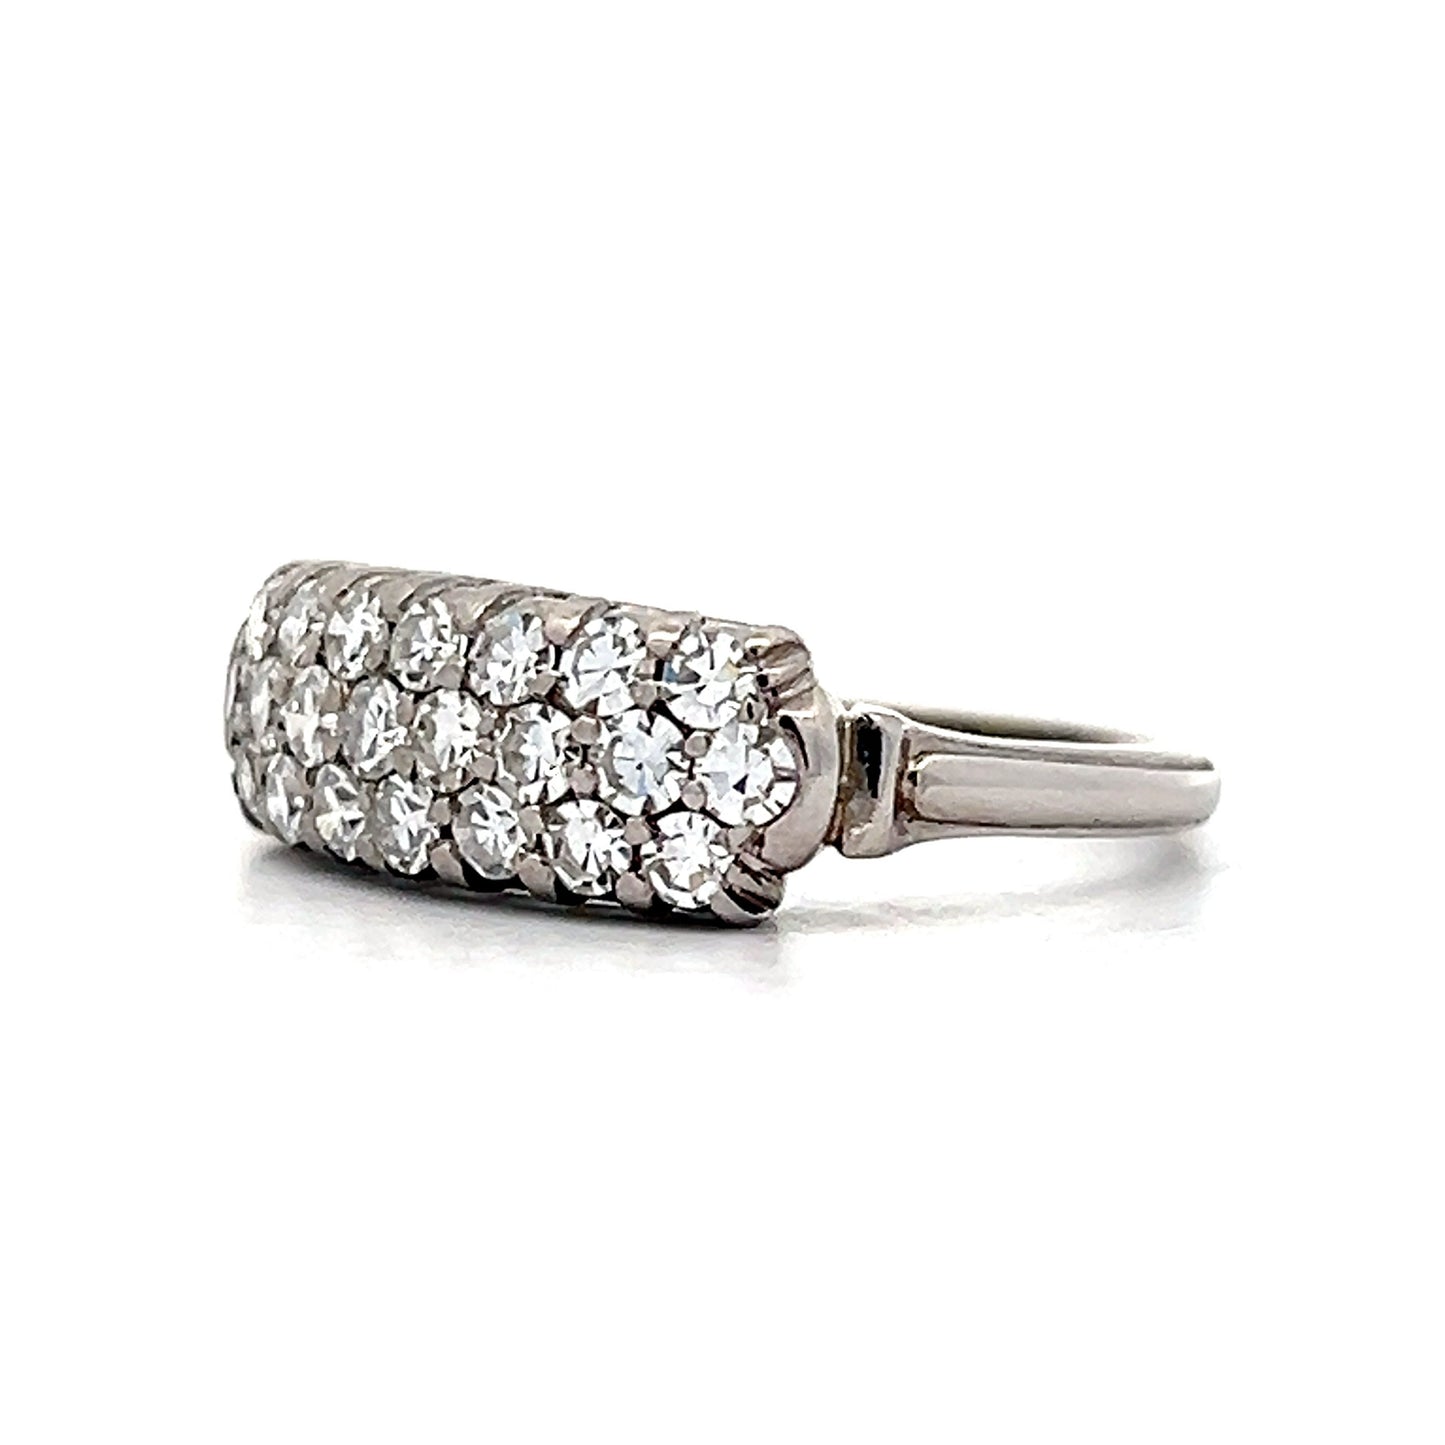 .66 Vintage 1950's Diamond Ring in 18k White Gold